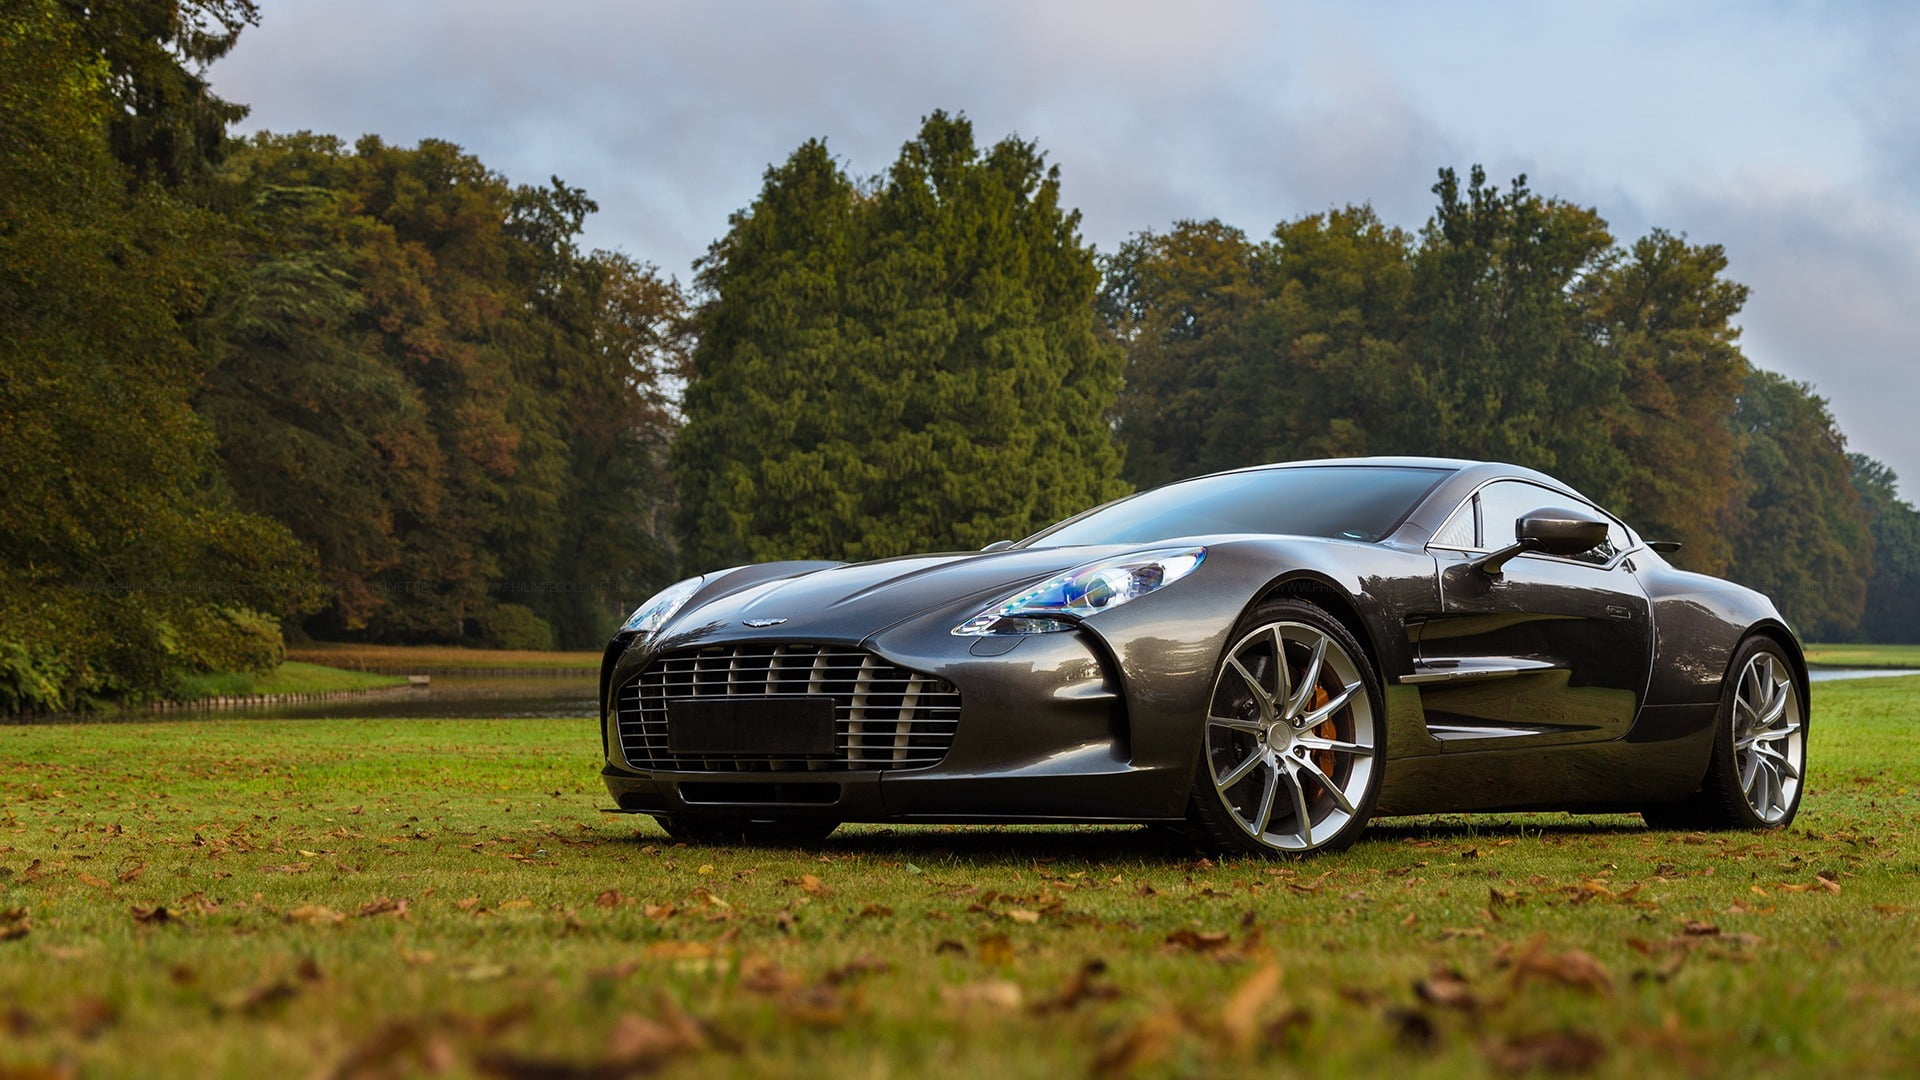 gray coupe, vehicle, sports car, Aston Martin, Aston Martin one-77